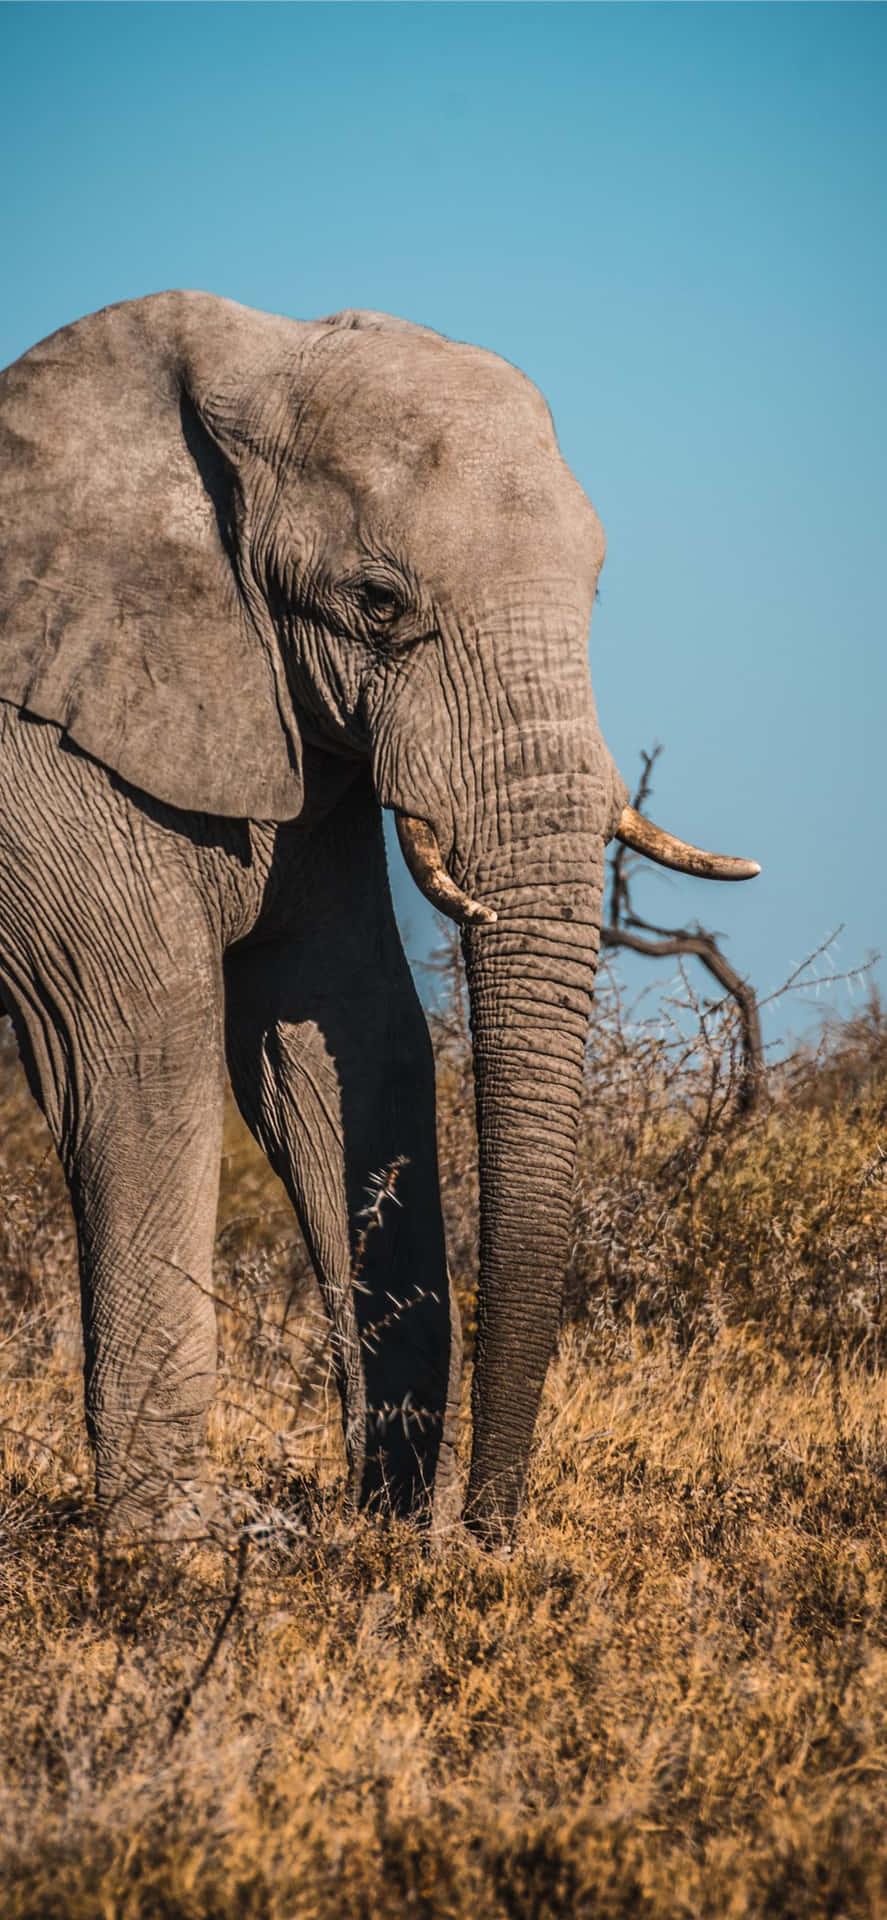 En elefant, der går gennem et tørt felt Wallpaper